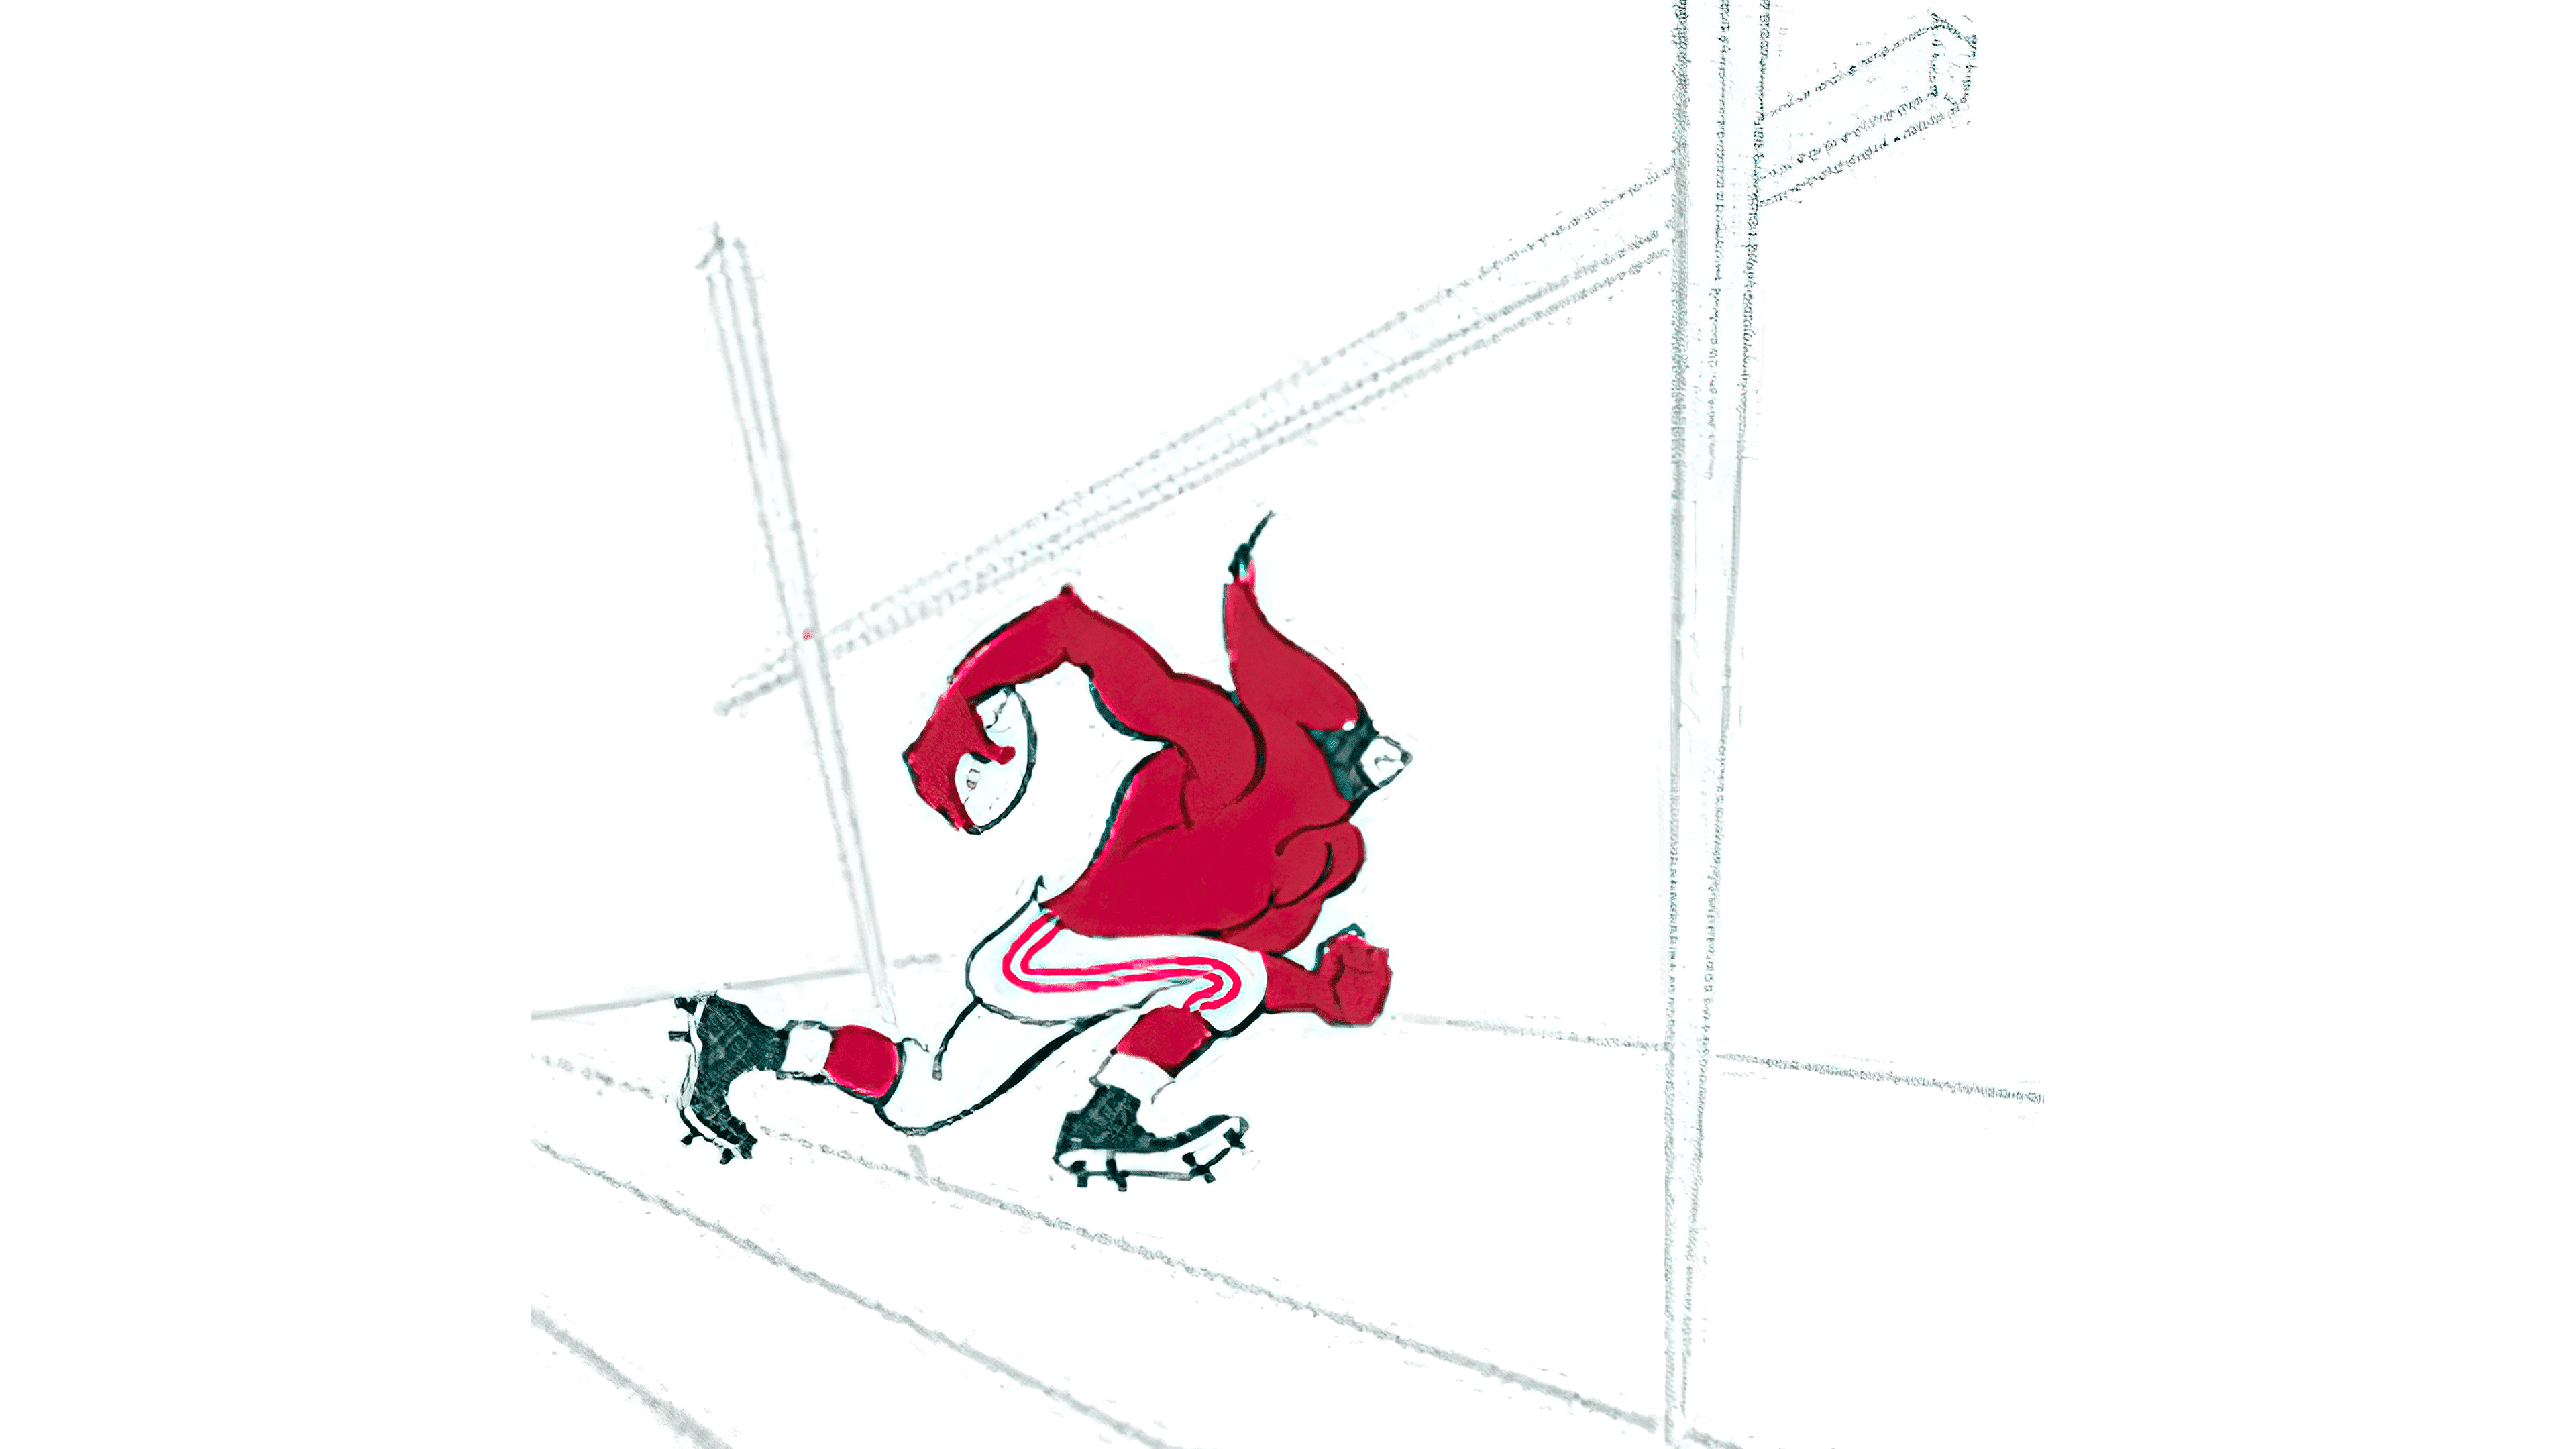 Arizona Cardinals Logo and symbol, meaning, history, PNG, brand